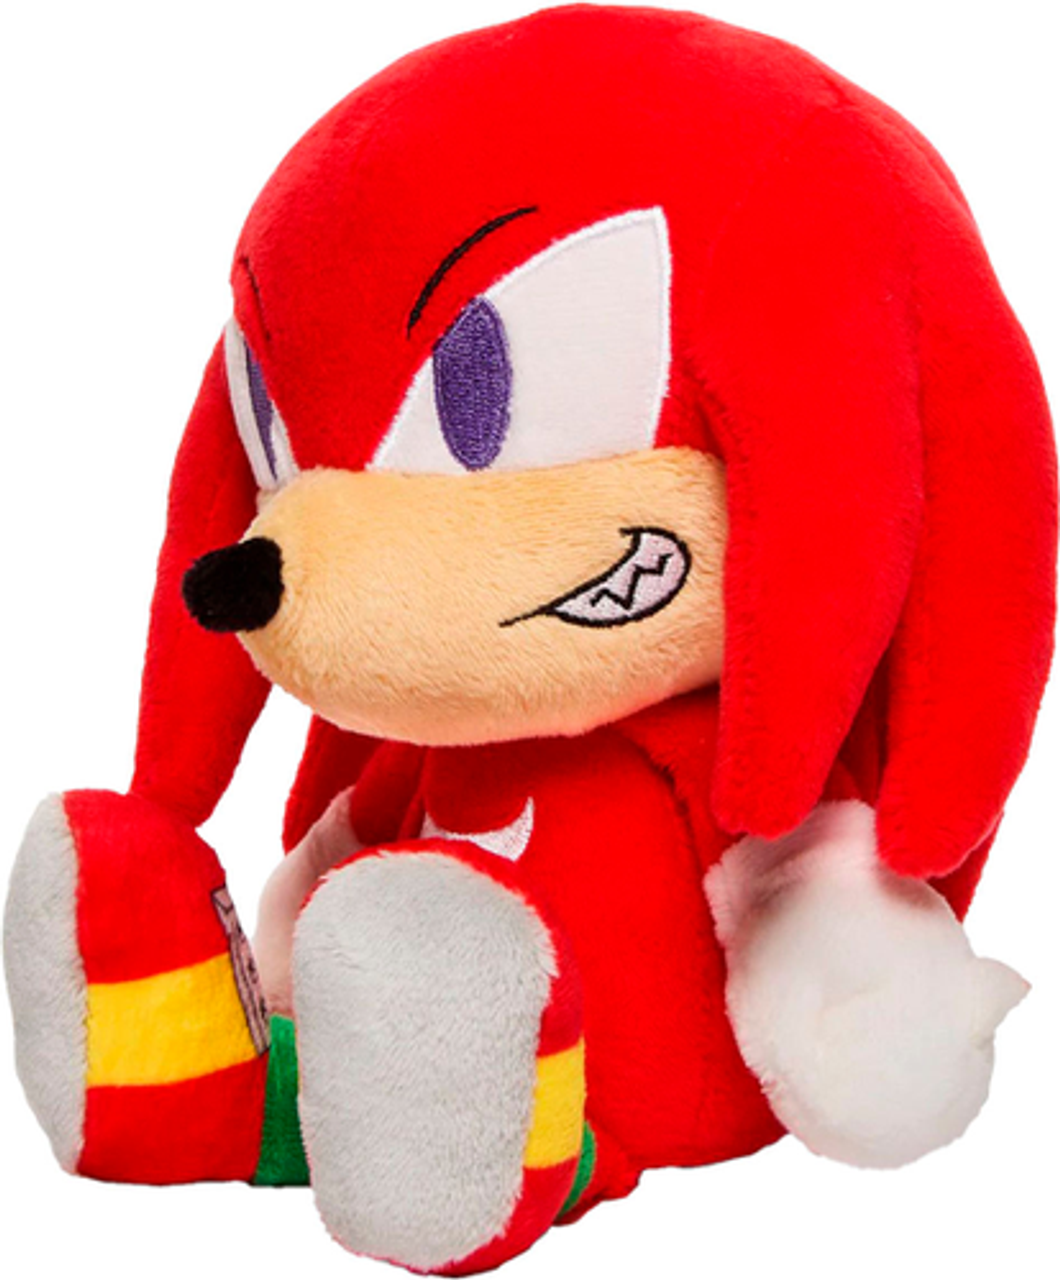 Sonic the Hedgehog  - Knuckles KidRobot Phunny Plush